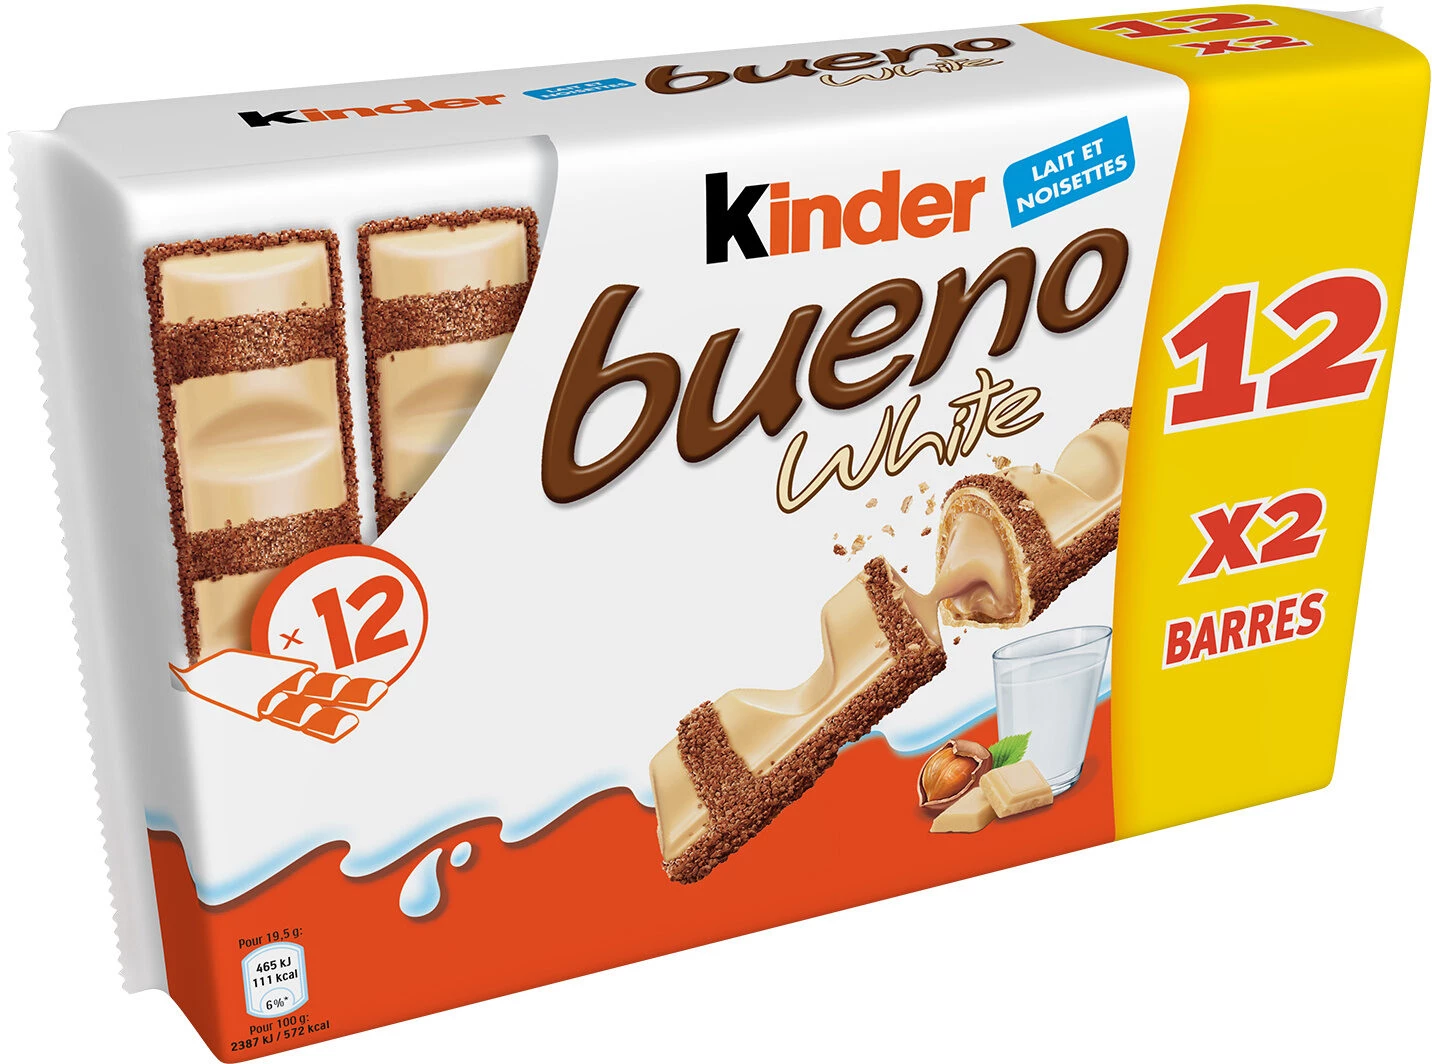 White chocolate candy bars 468g - KINDER